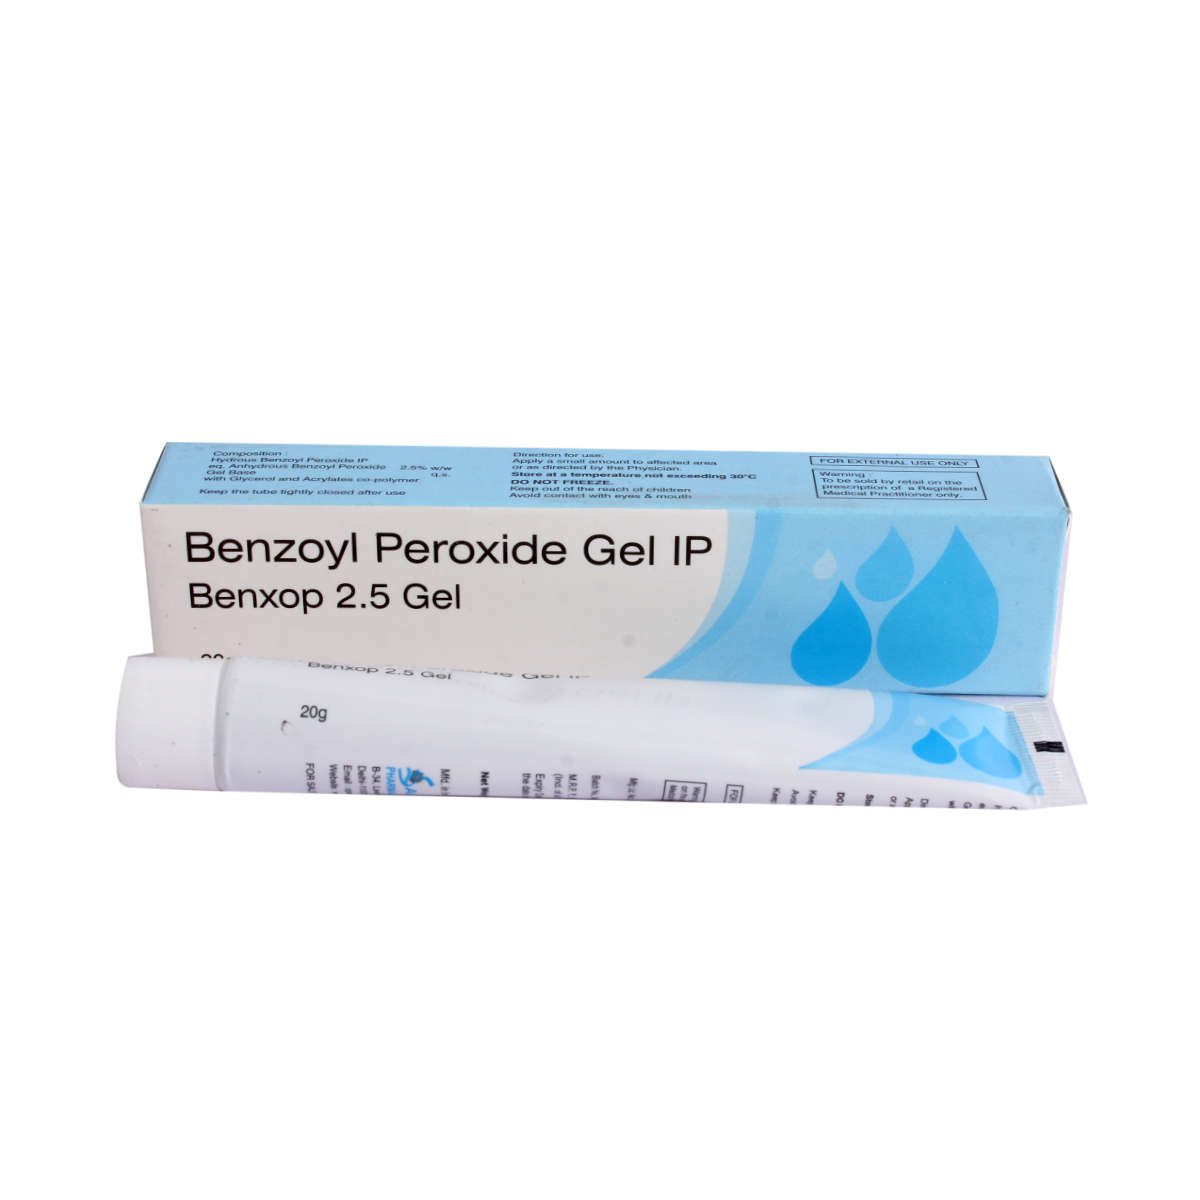 Benxop 2.5 Gel - 20 gm each